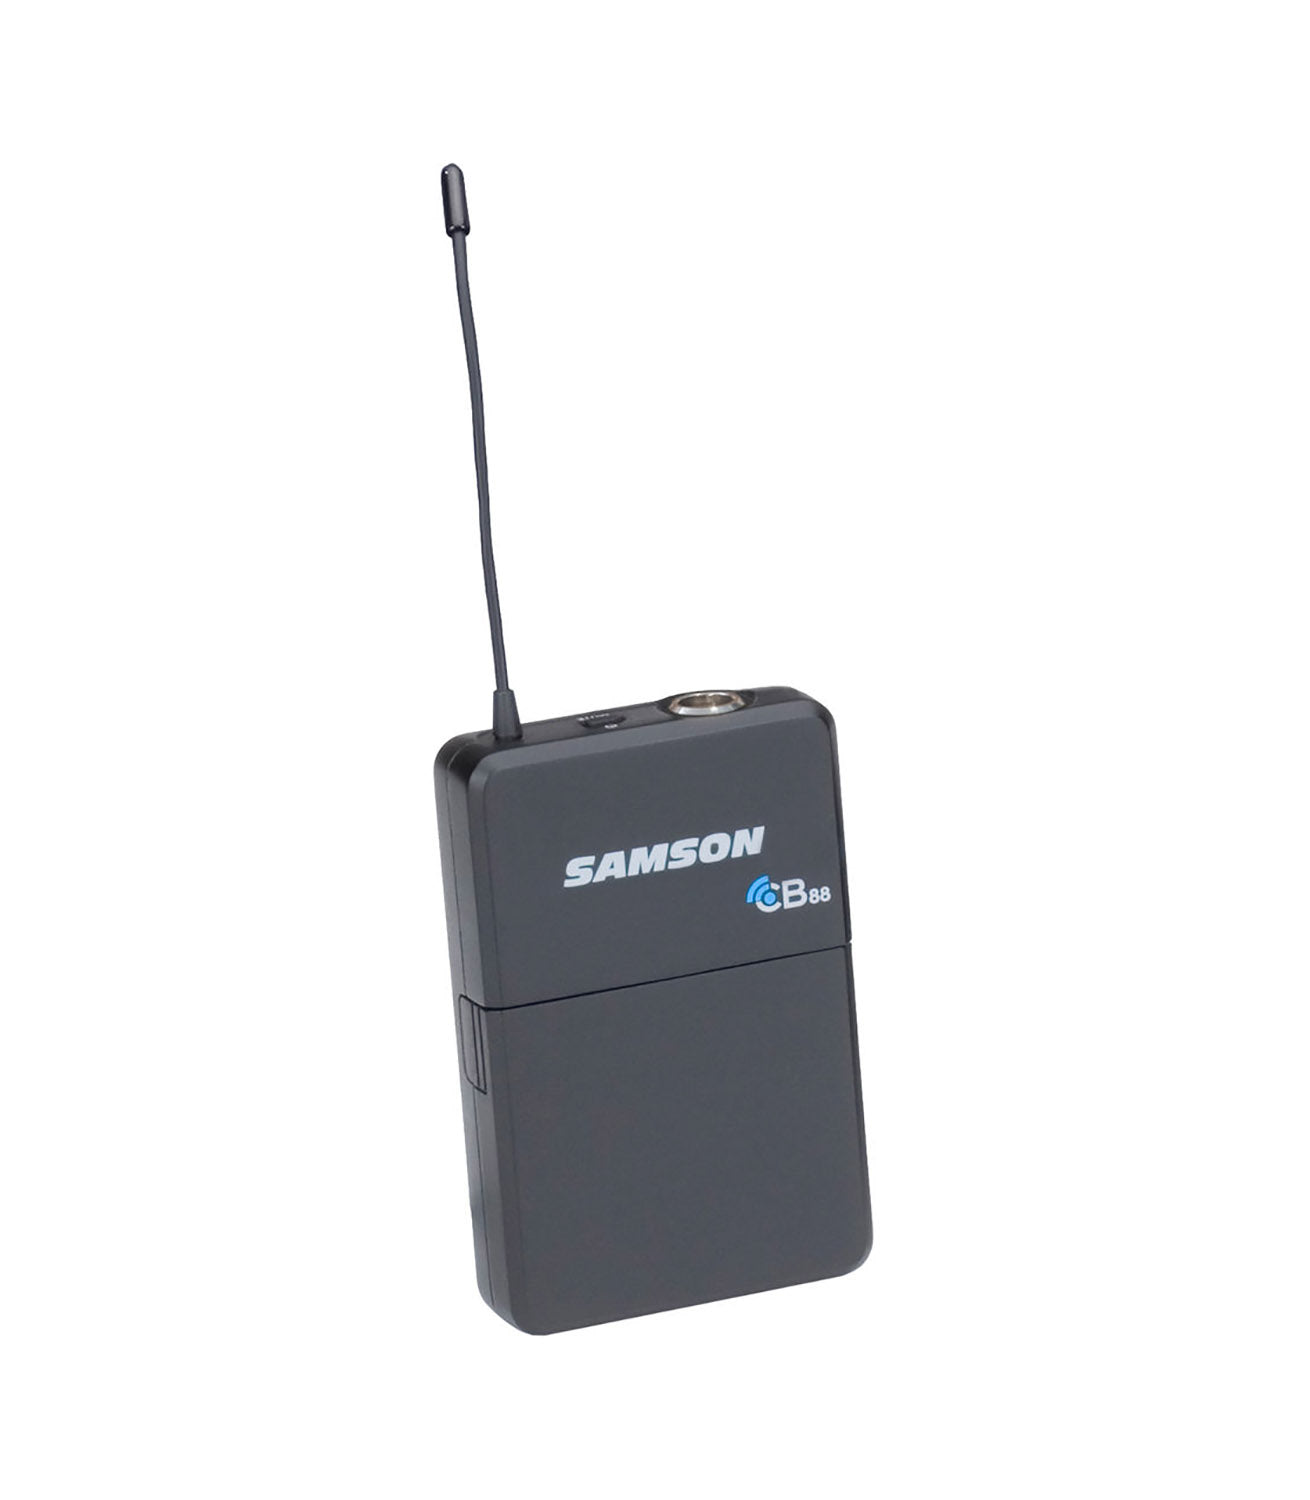 Samson SWC88T00-D, CB88 Wireless Bodypack Transmitter - D 542 to 566 MHz - Hollywood DJ